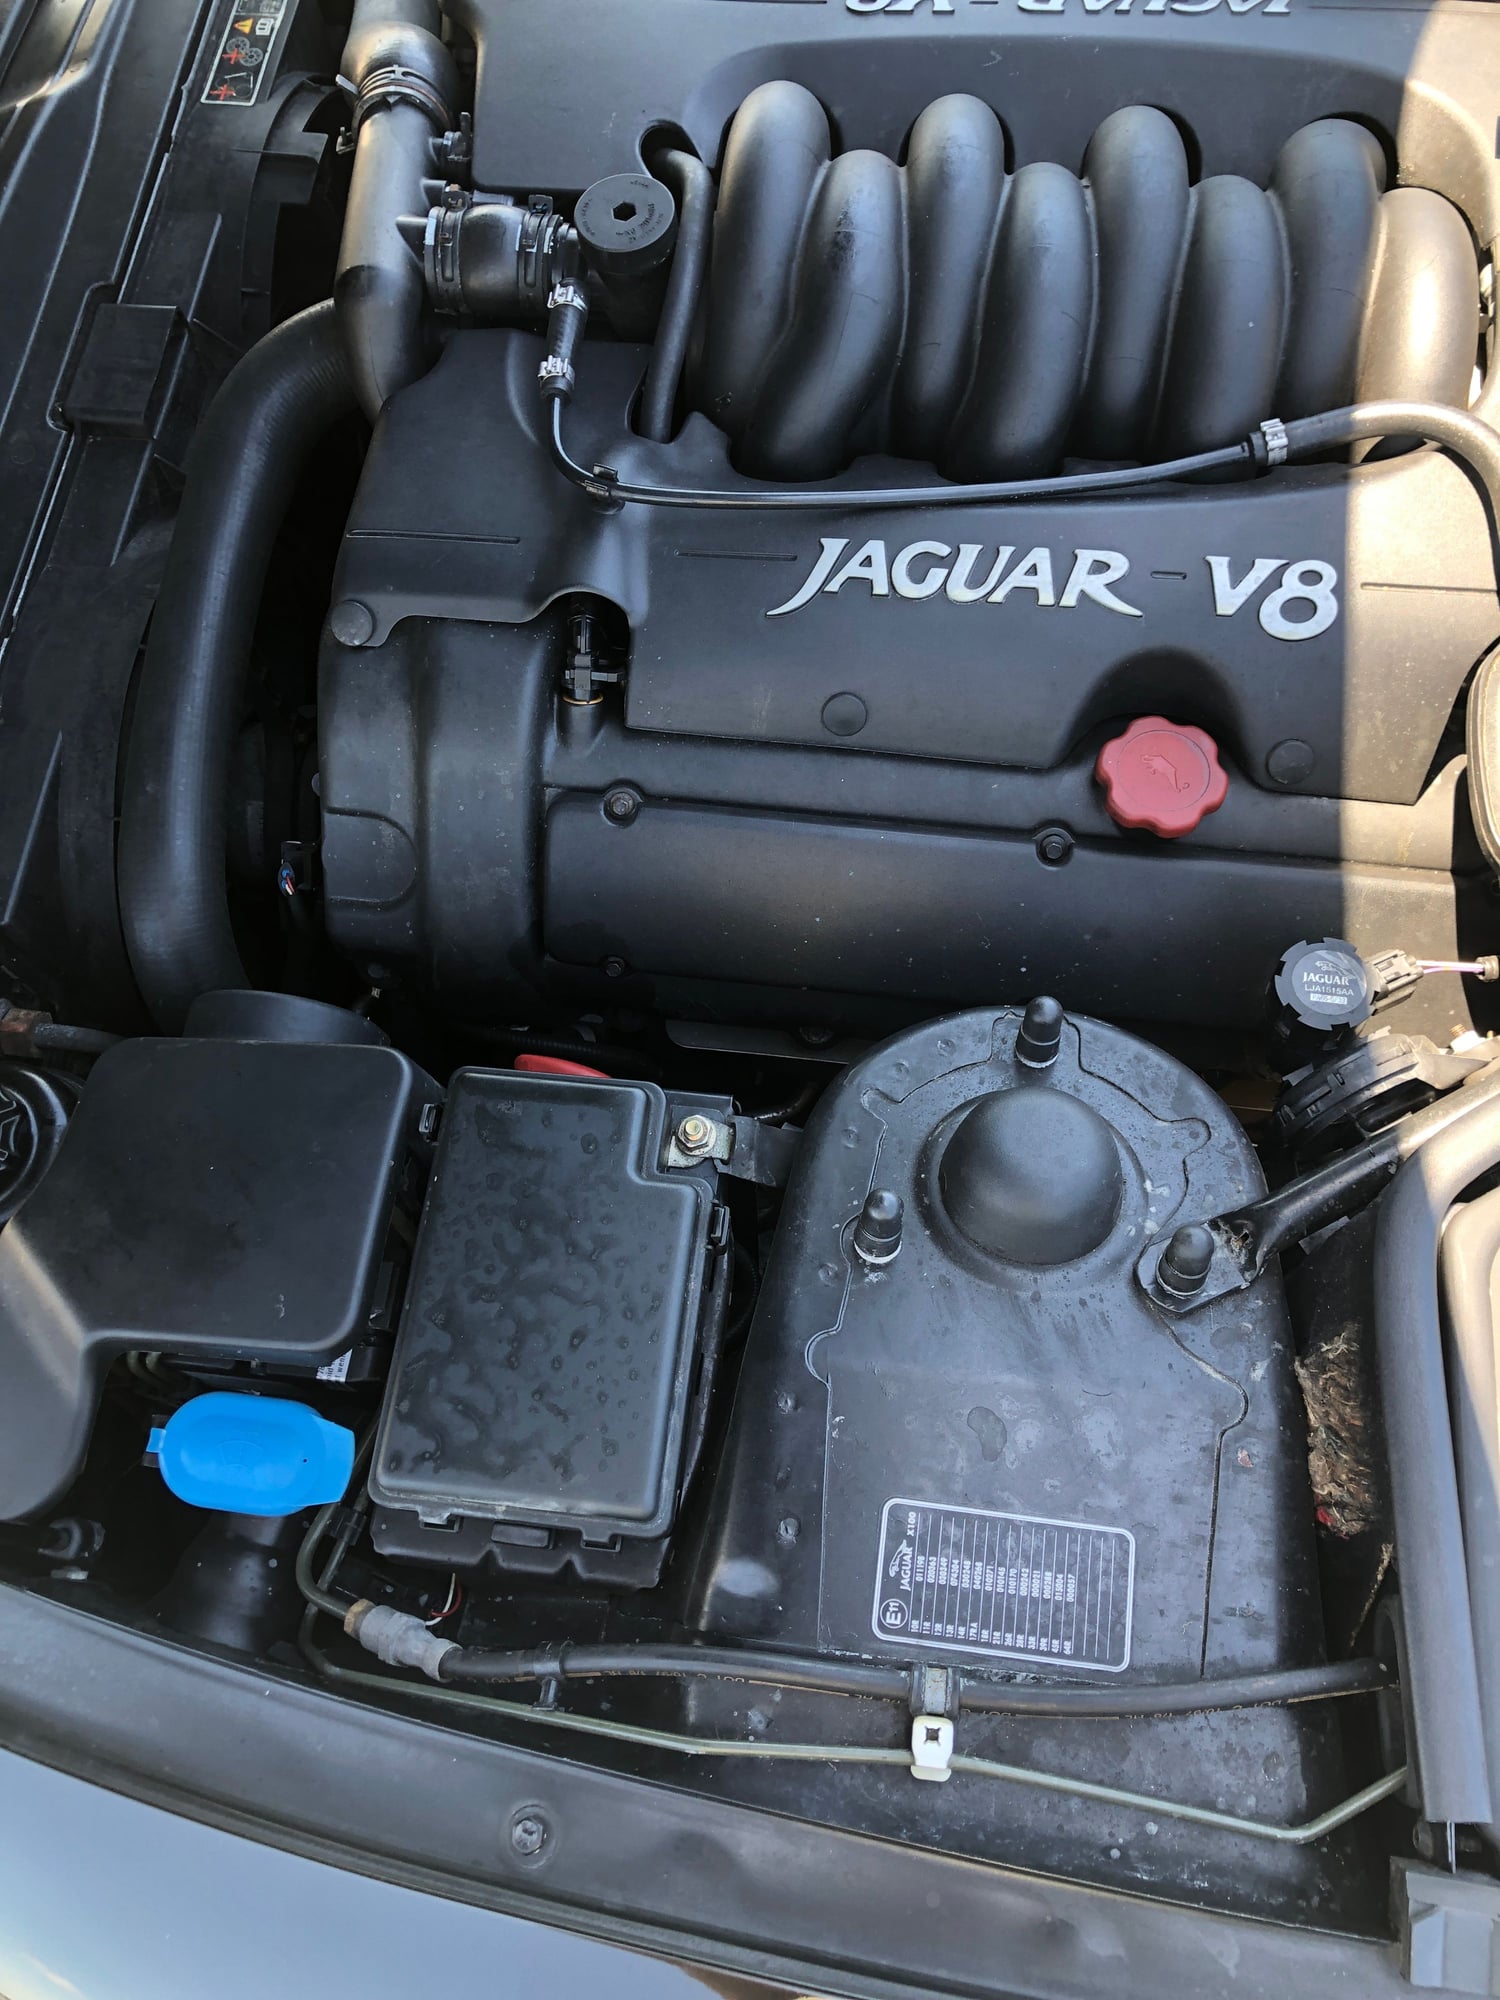 1998 Jaguar XK8 - Jaguar XK8 Convertible 1998 under 100,000kms - Used - VIN SAJJGAFD3AR023980 - 8 cyl - 2WD - Automatic - Convertible - Black - Gold Coast, Australia